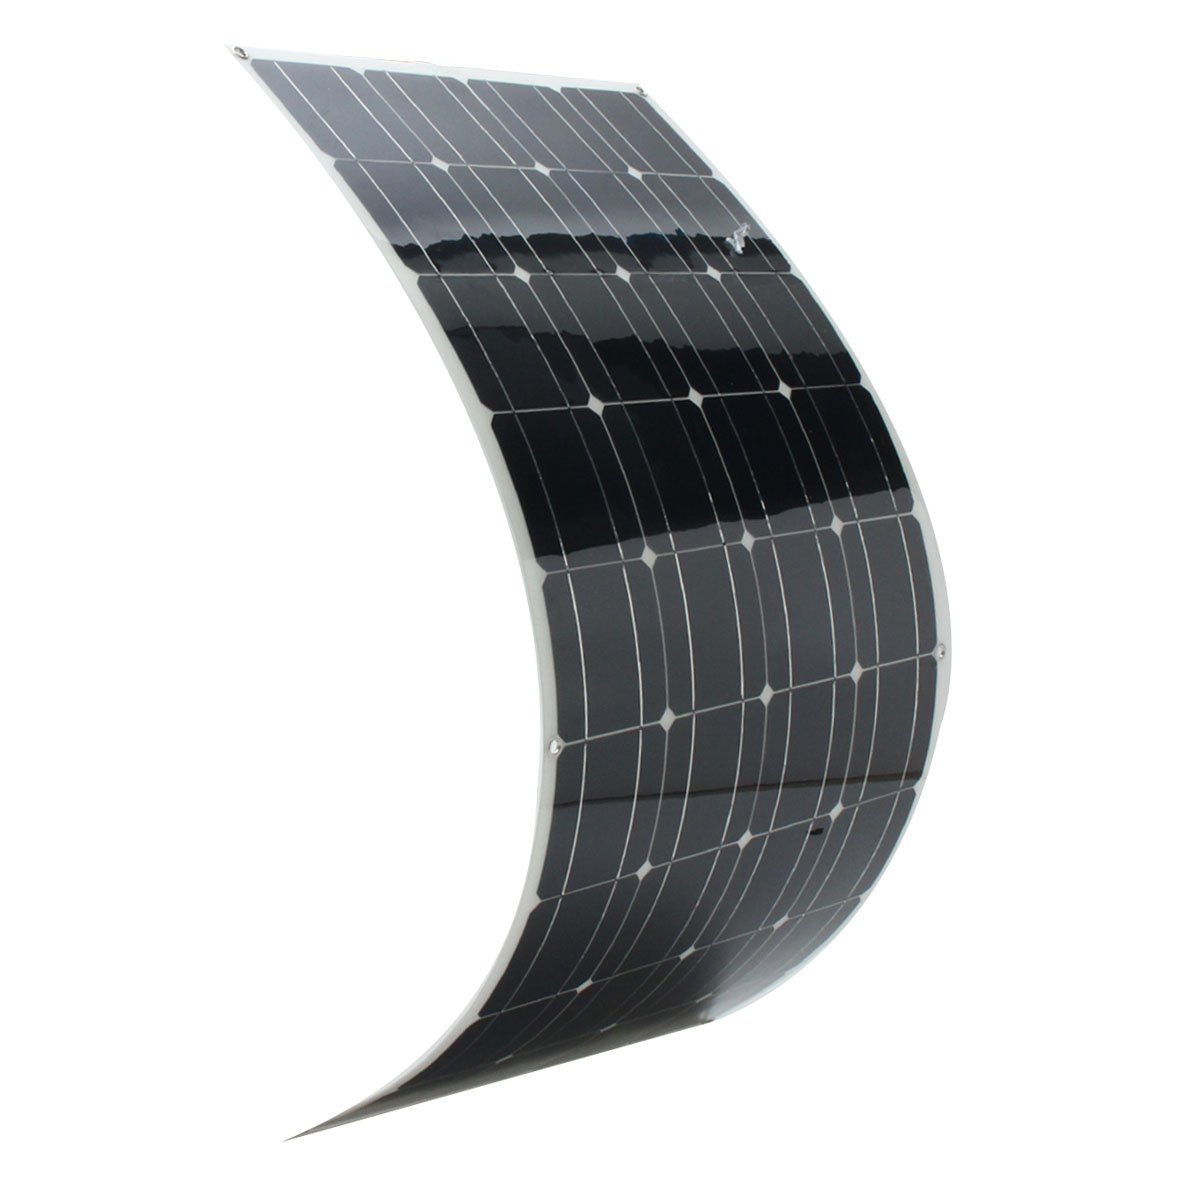 Elfeland® SP-36 120W 12V 1180*540mm Monocrystalline Semi Flexible Solar Panel With 1.5m Cable 2